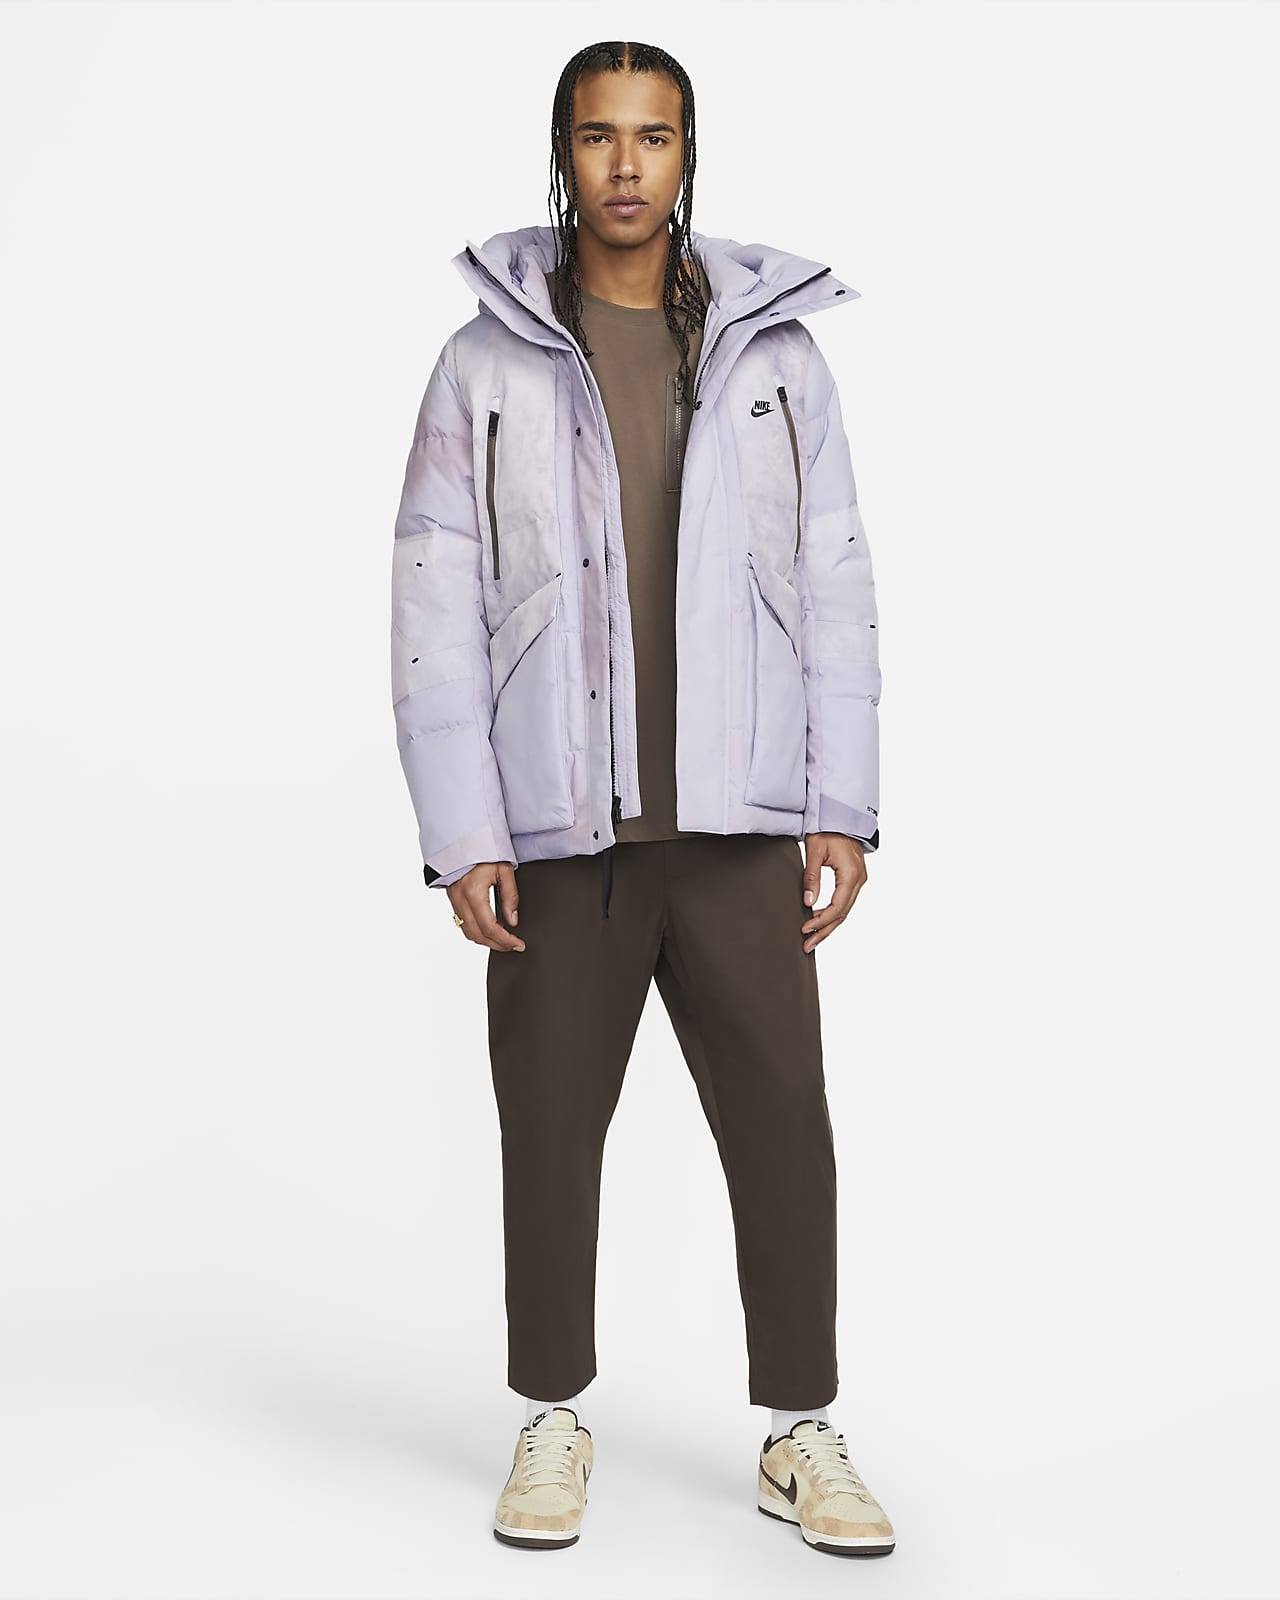 Louis Vuitton Windbreaker Coats, Jackets & Vests for Men for Sale, Shop  New & Used